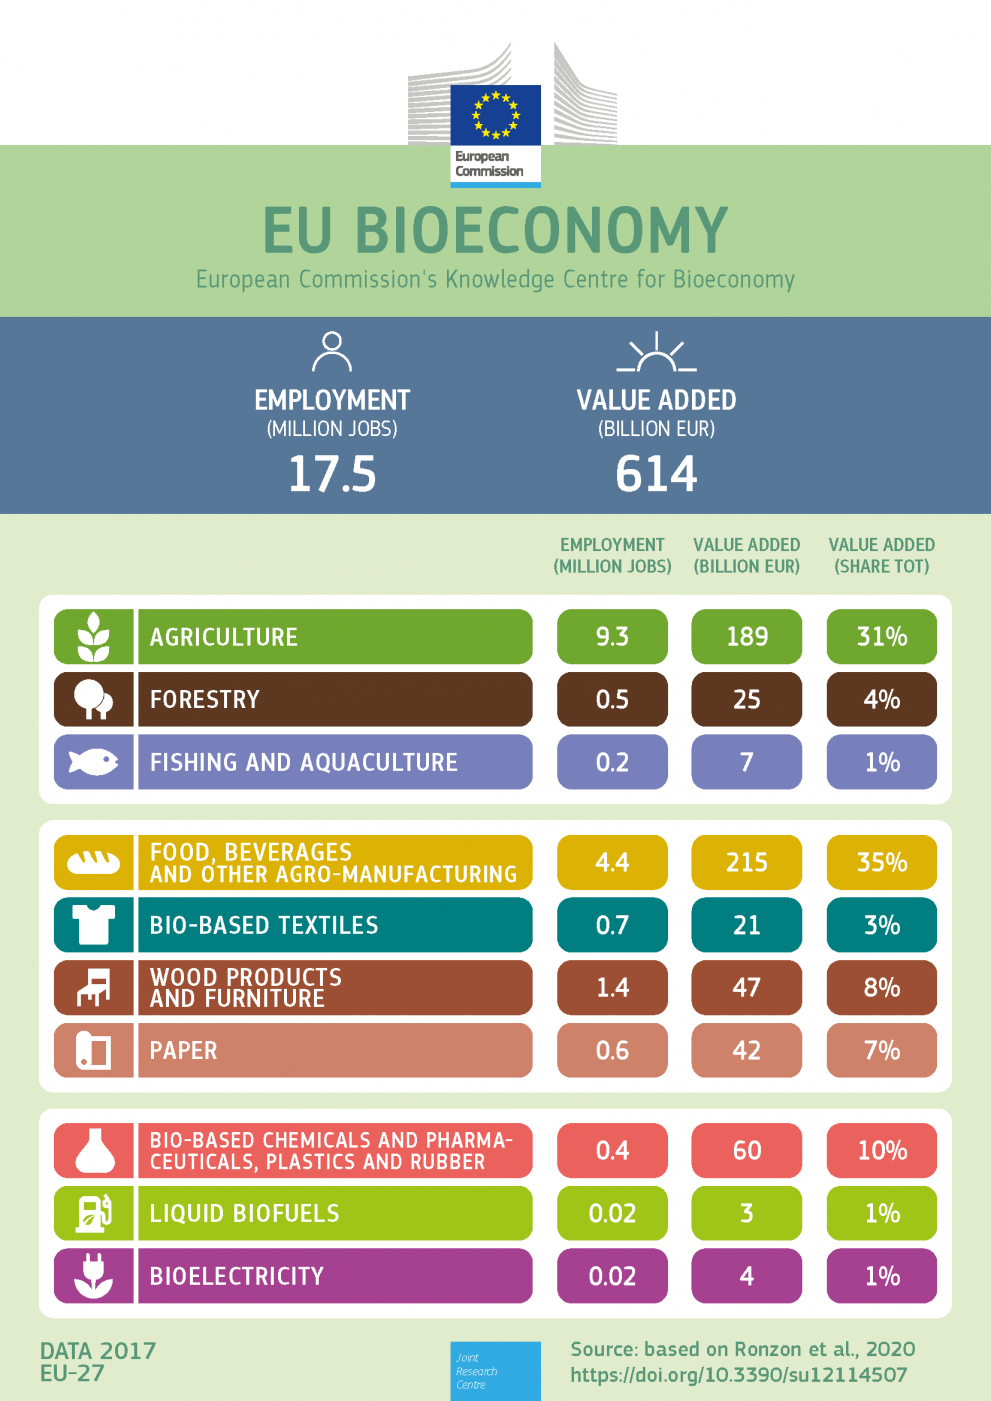 20201127-bioeconomy_infographic_update_2020.png